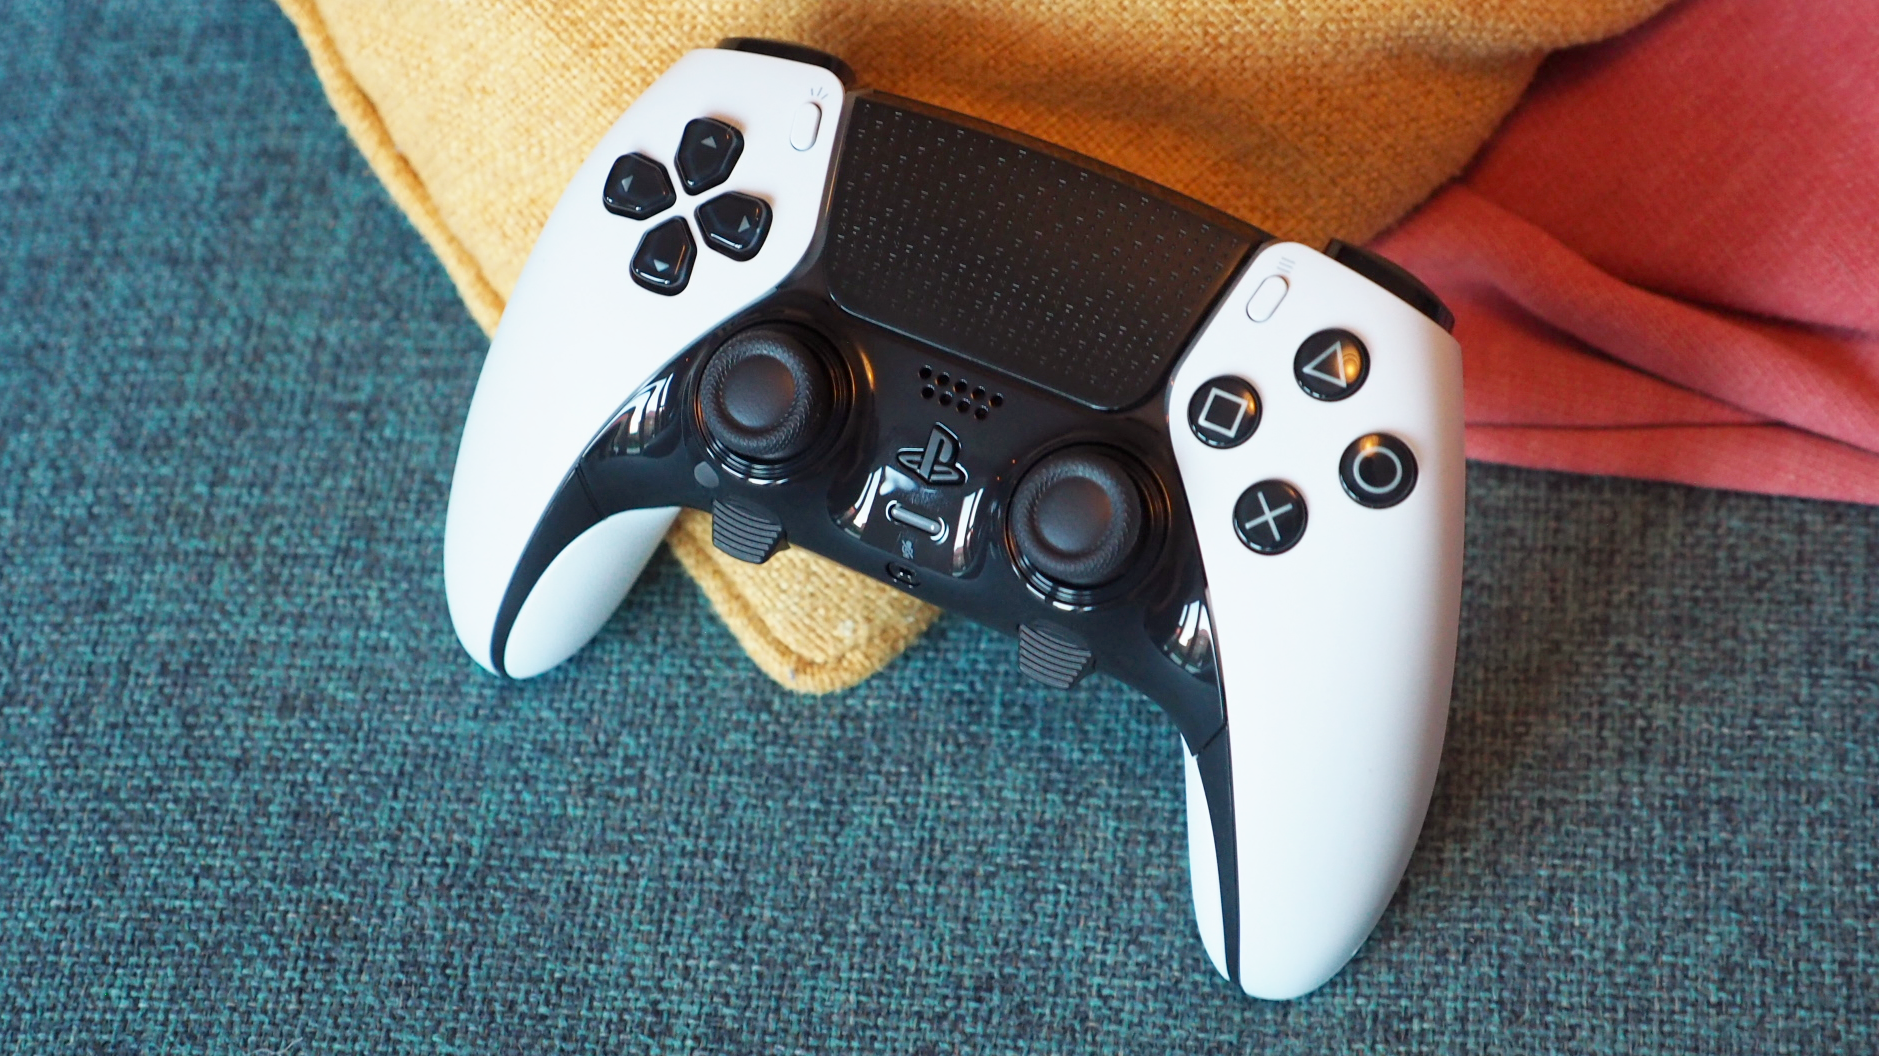 PS5 DualSense Edge controller: everything we know so far